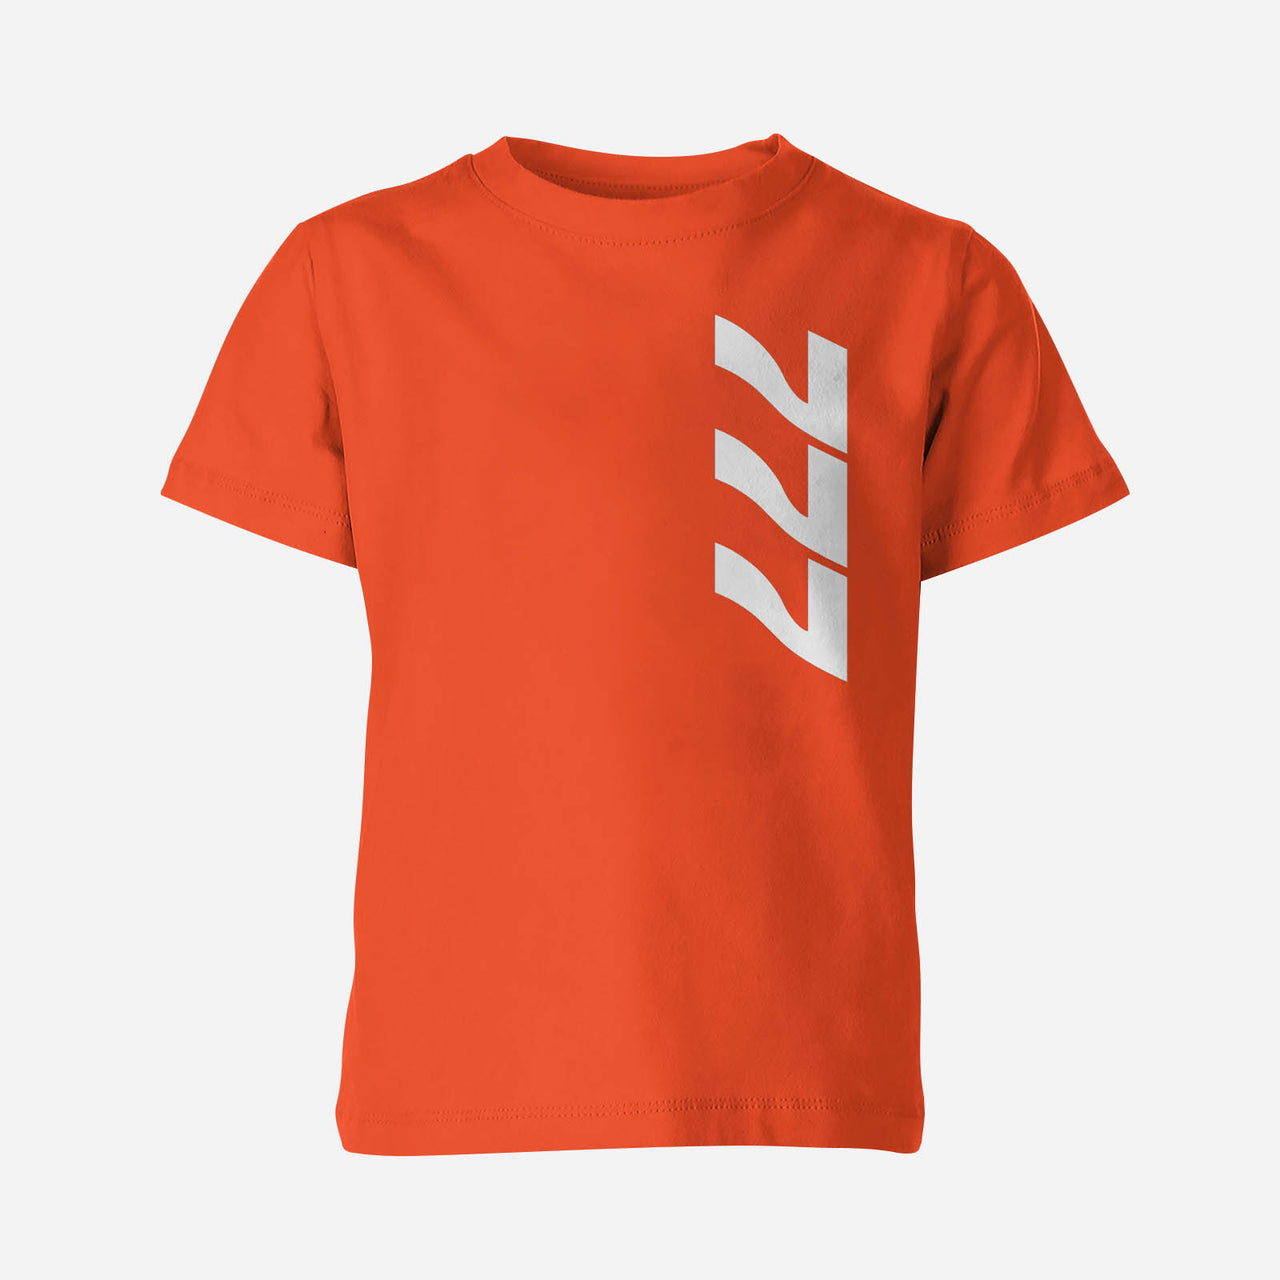 777 Side Text Designed Children T-Shirts